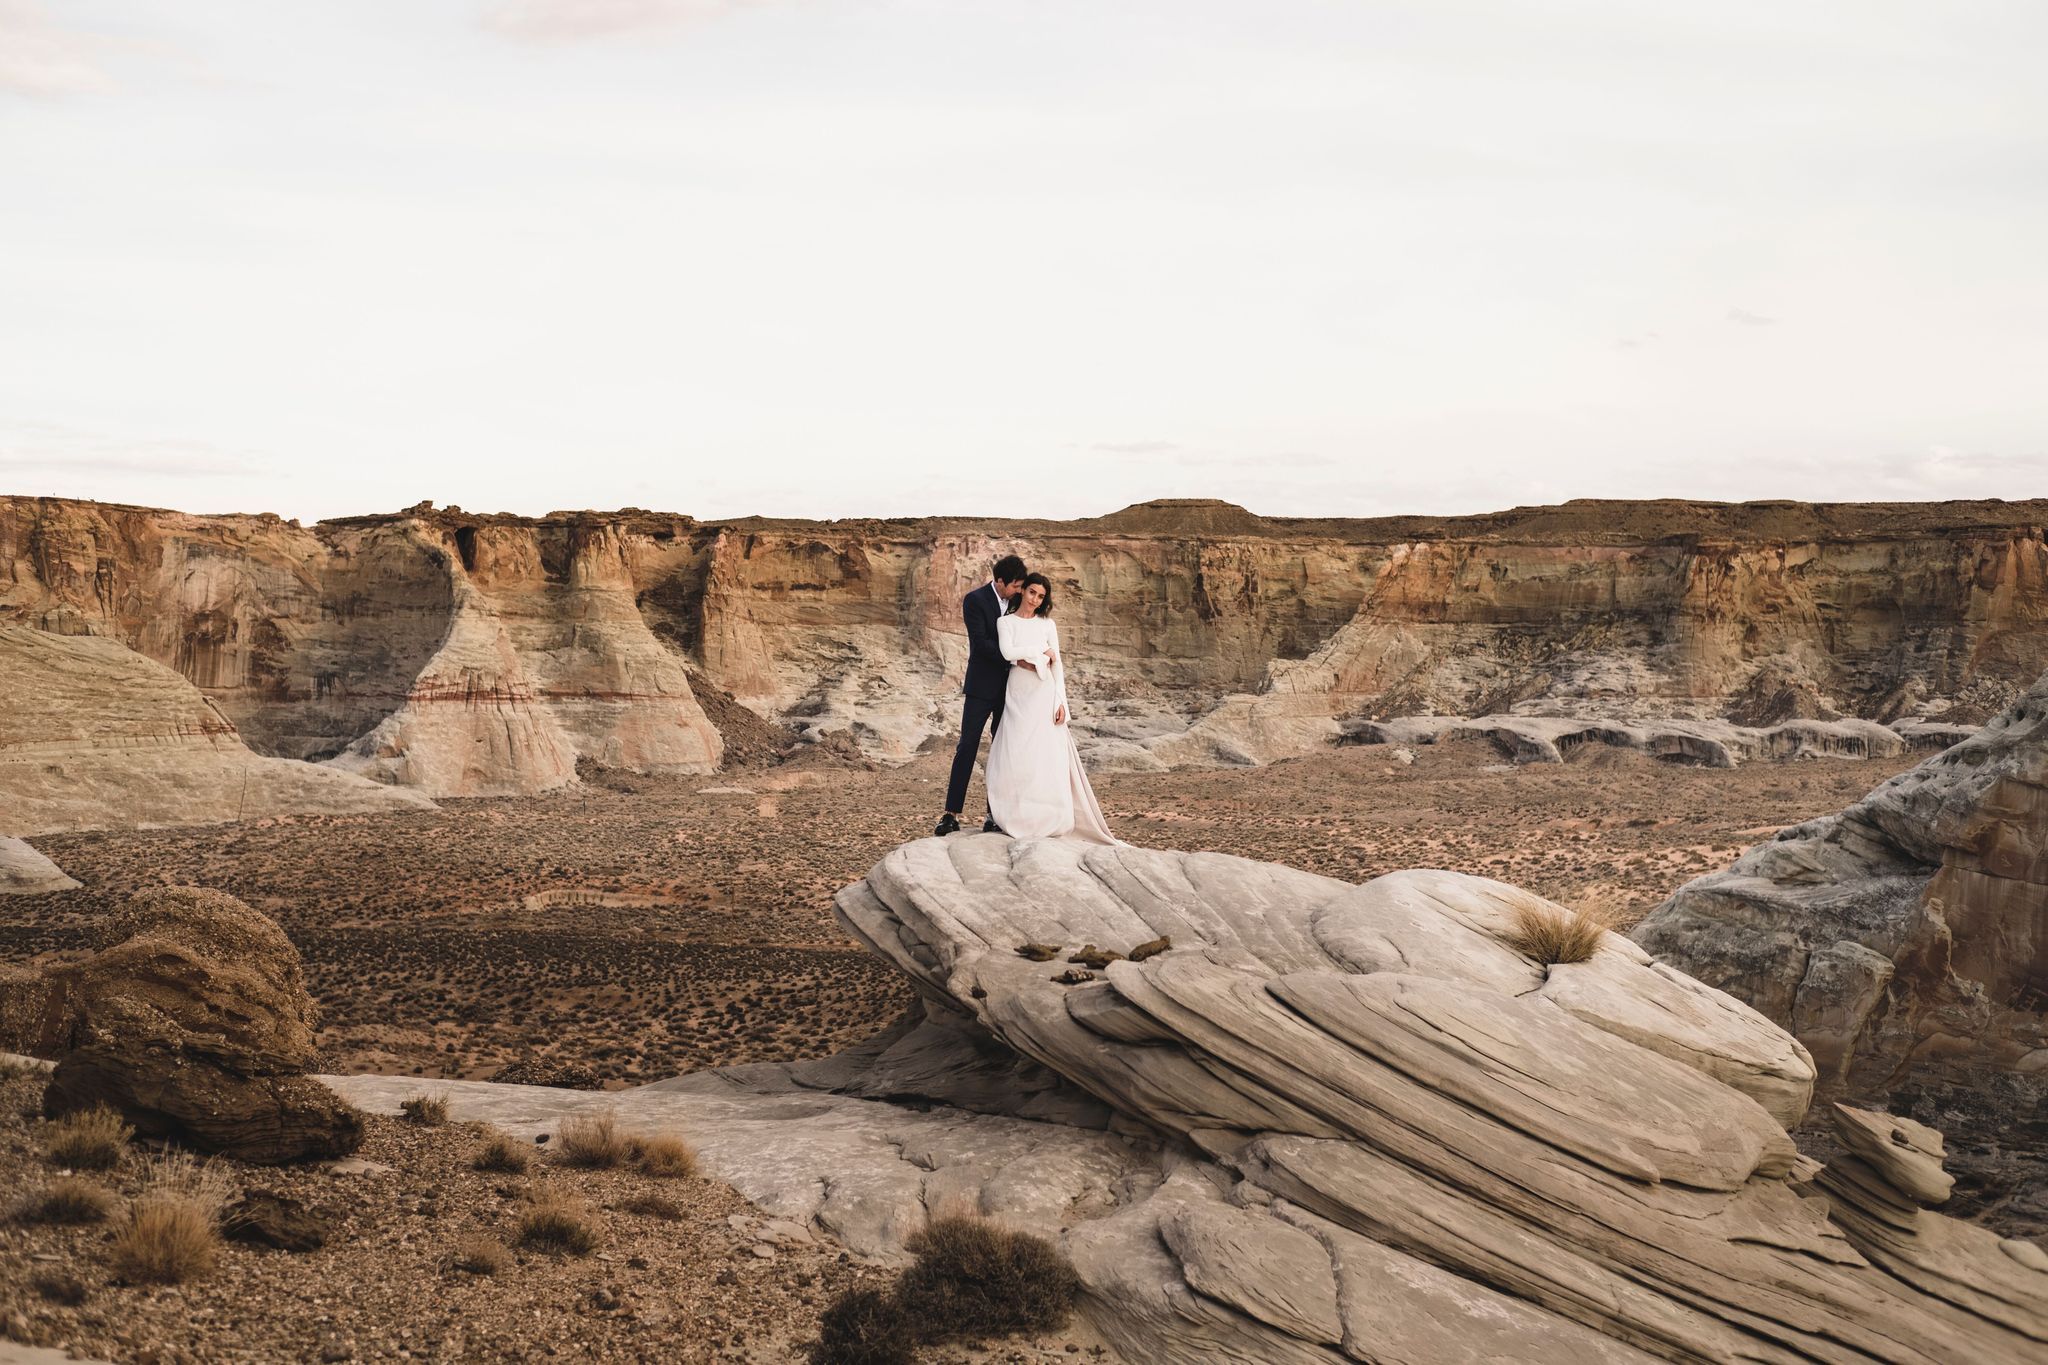 Photograph, Badlands, Wadi, Dress, Rock, Landscape, Bride, Photography, Formation, Geology, 